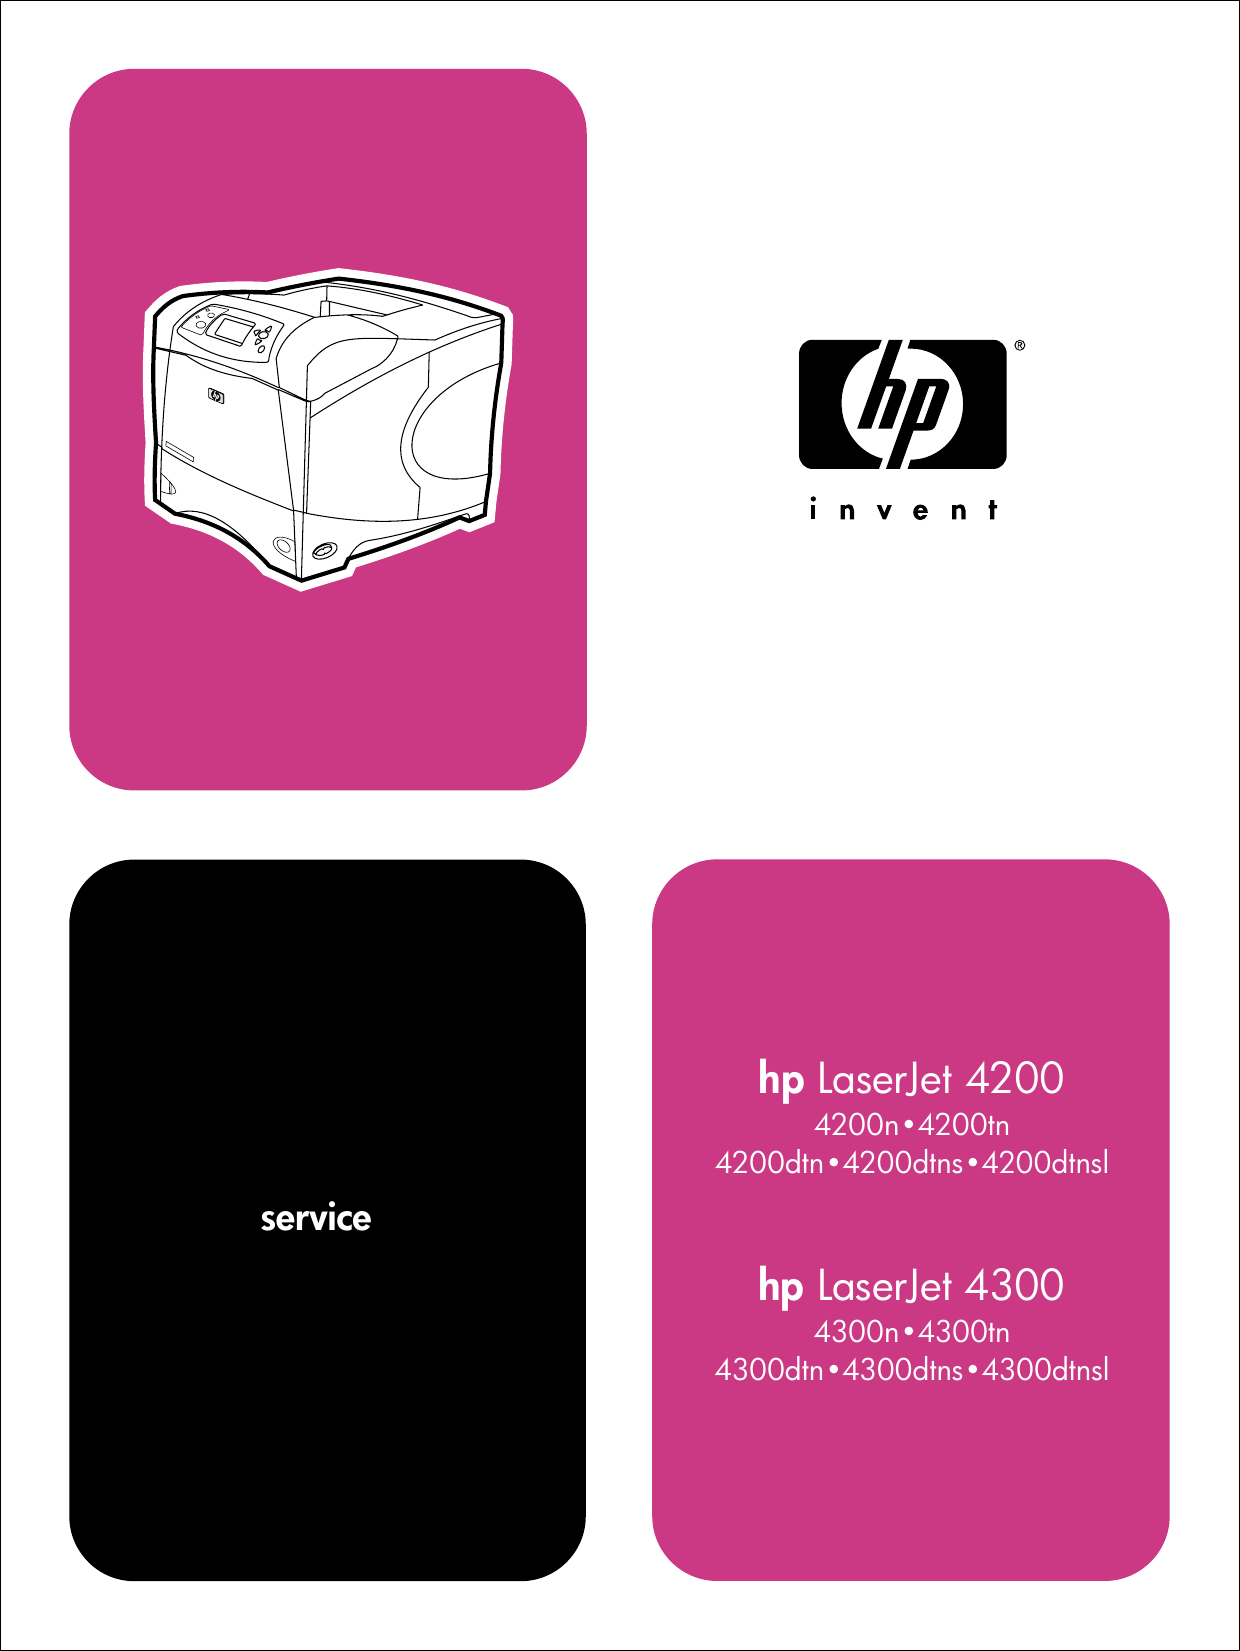 HP Laserjet 4200, 4300 laser printer service guide Preview image 1